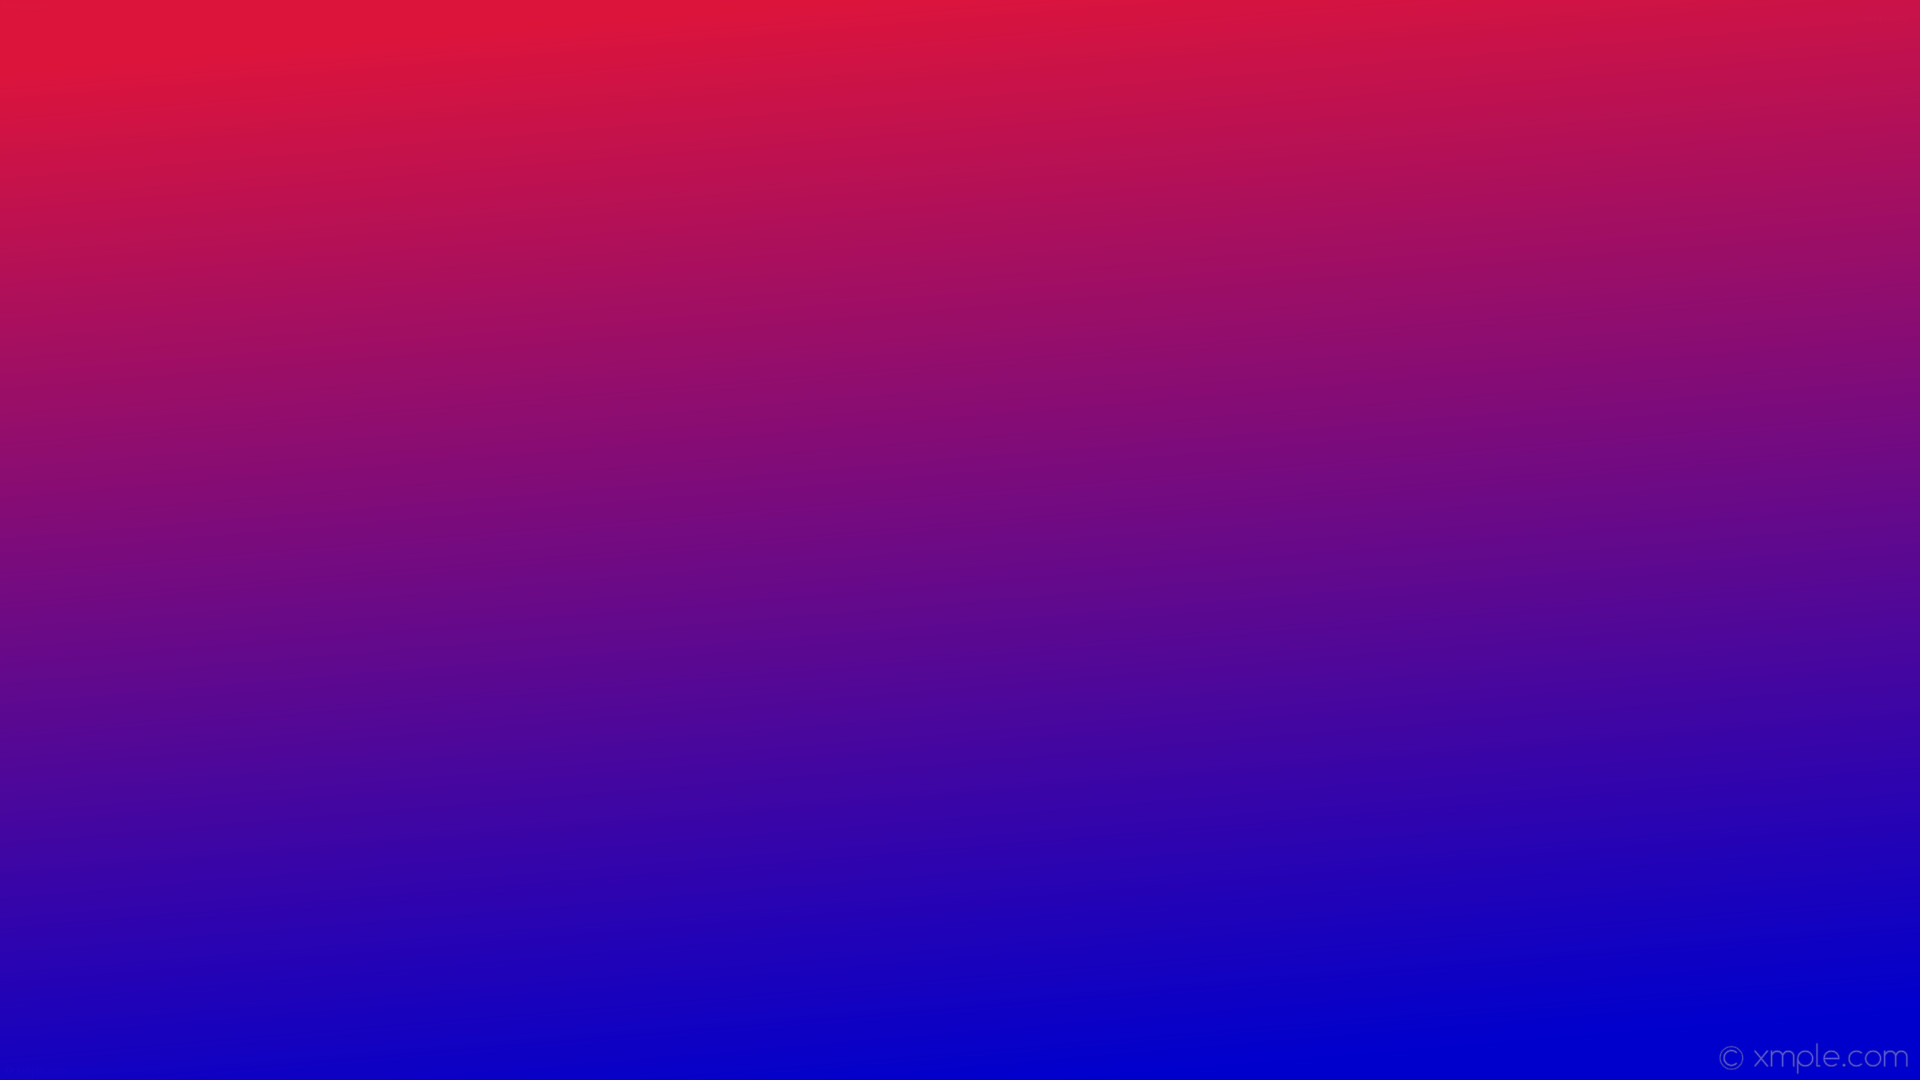 1920x1080 wallpaper linear red gradient blue crimson medium blue #dc143c #0000cd 105Â°